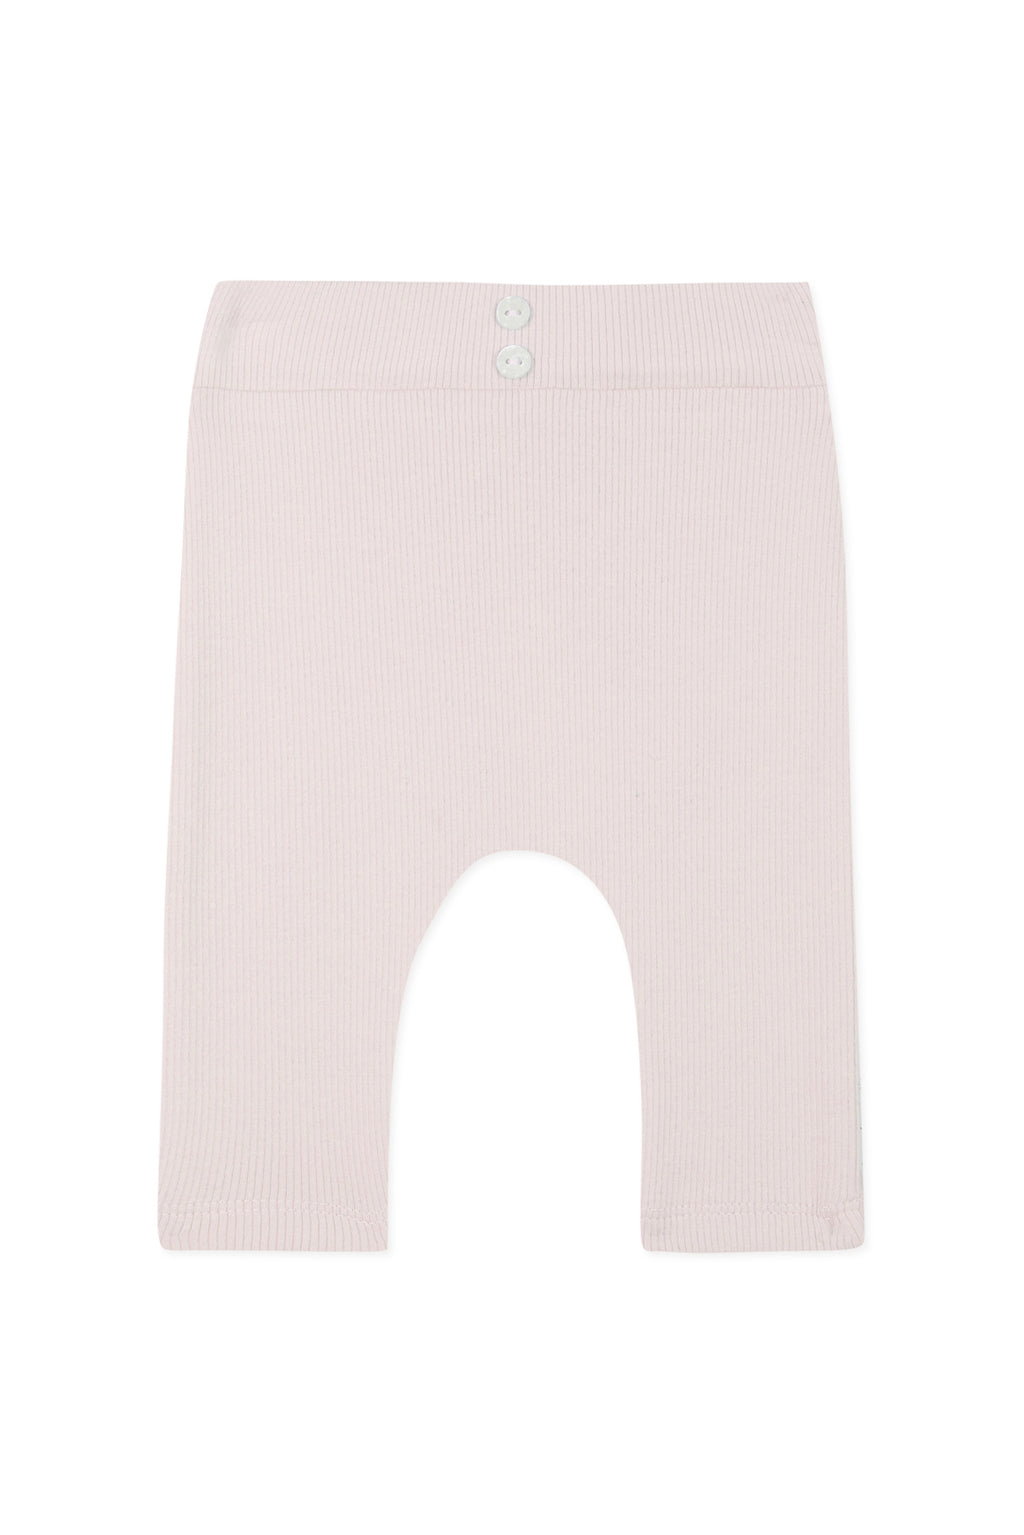 Legging - Pale pink cotton